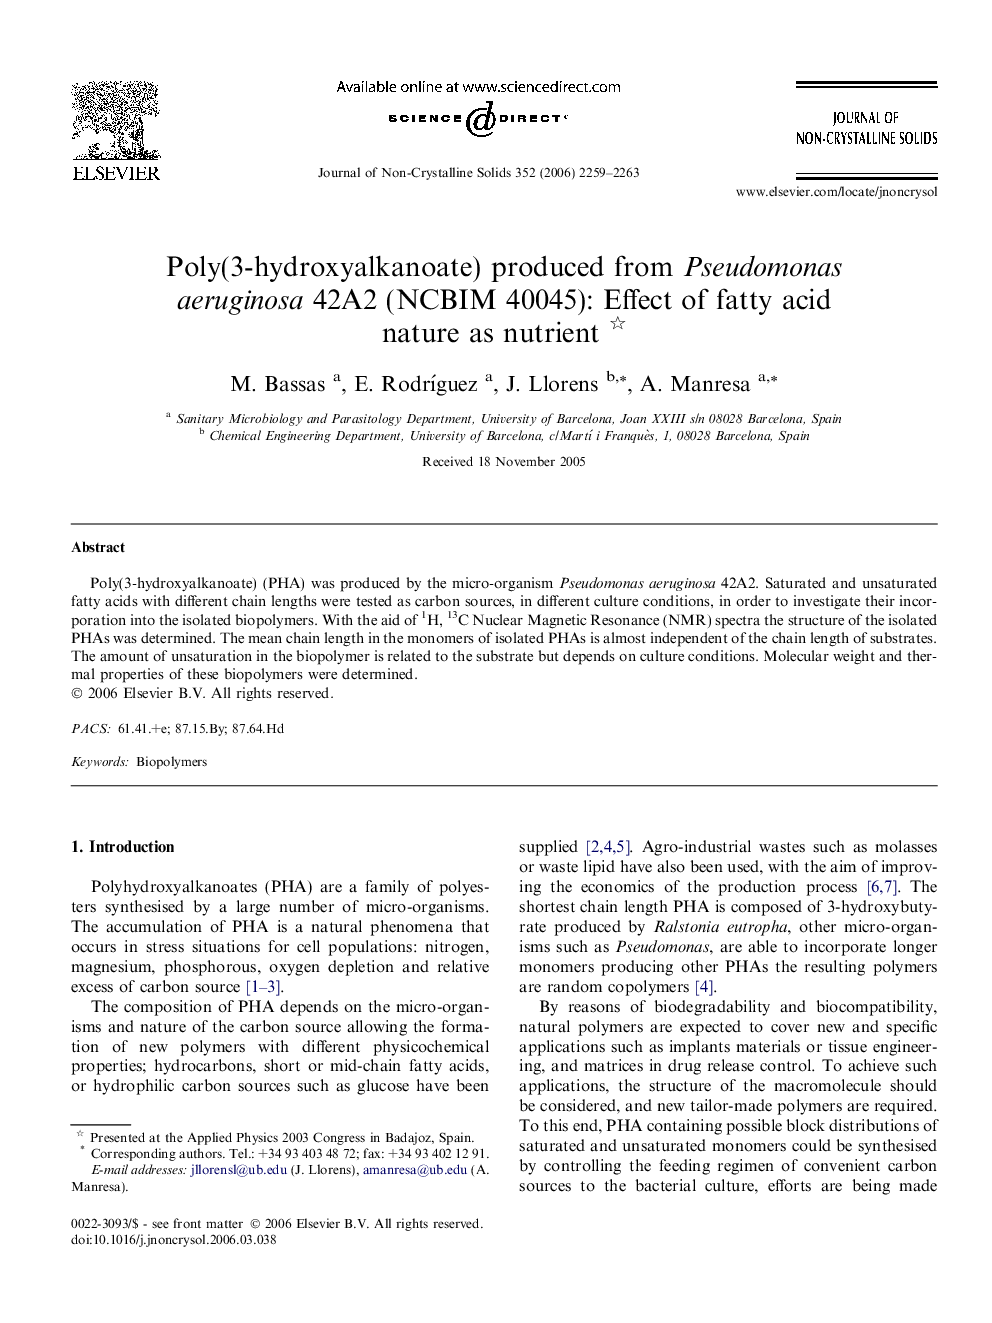 Poly(3-hydroxyalkanoate) produced from Pseudomonas aeruginosa 42A2 (NCBIM 40045): Effect of fatty acid nature as nutrient 